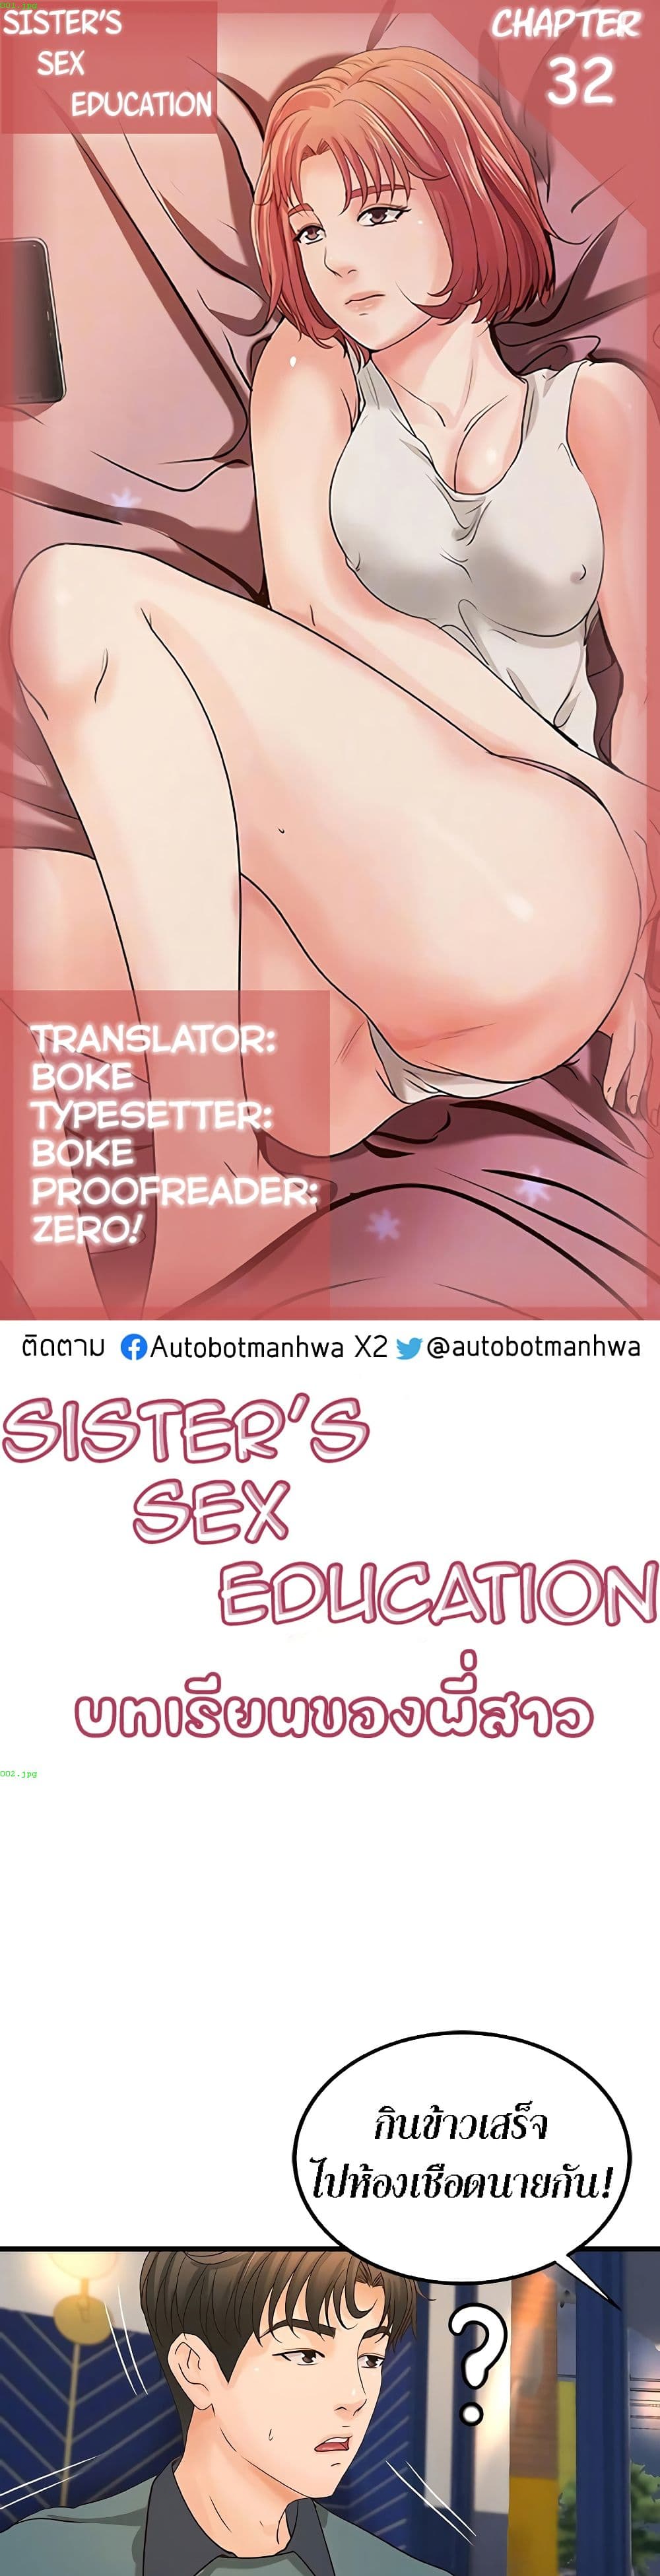 Sister's Sex Education 32-32